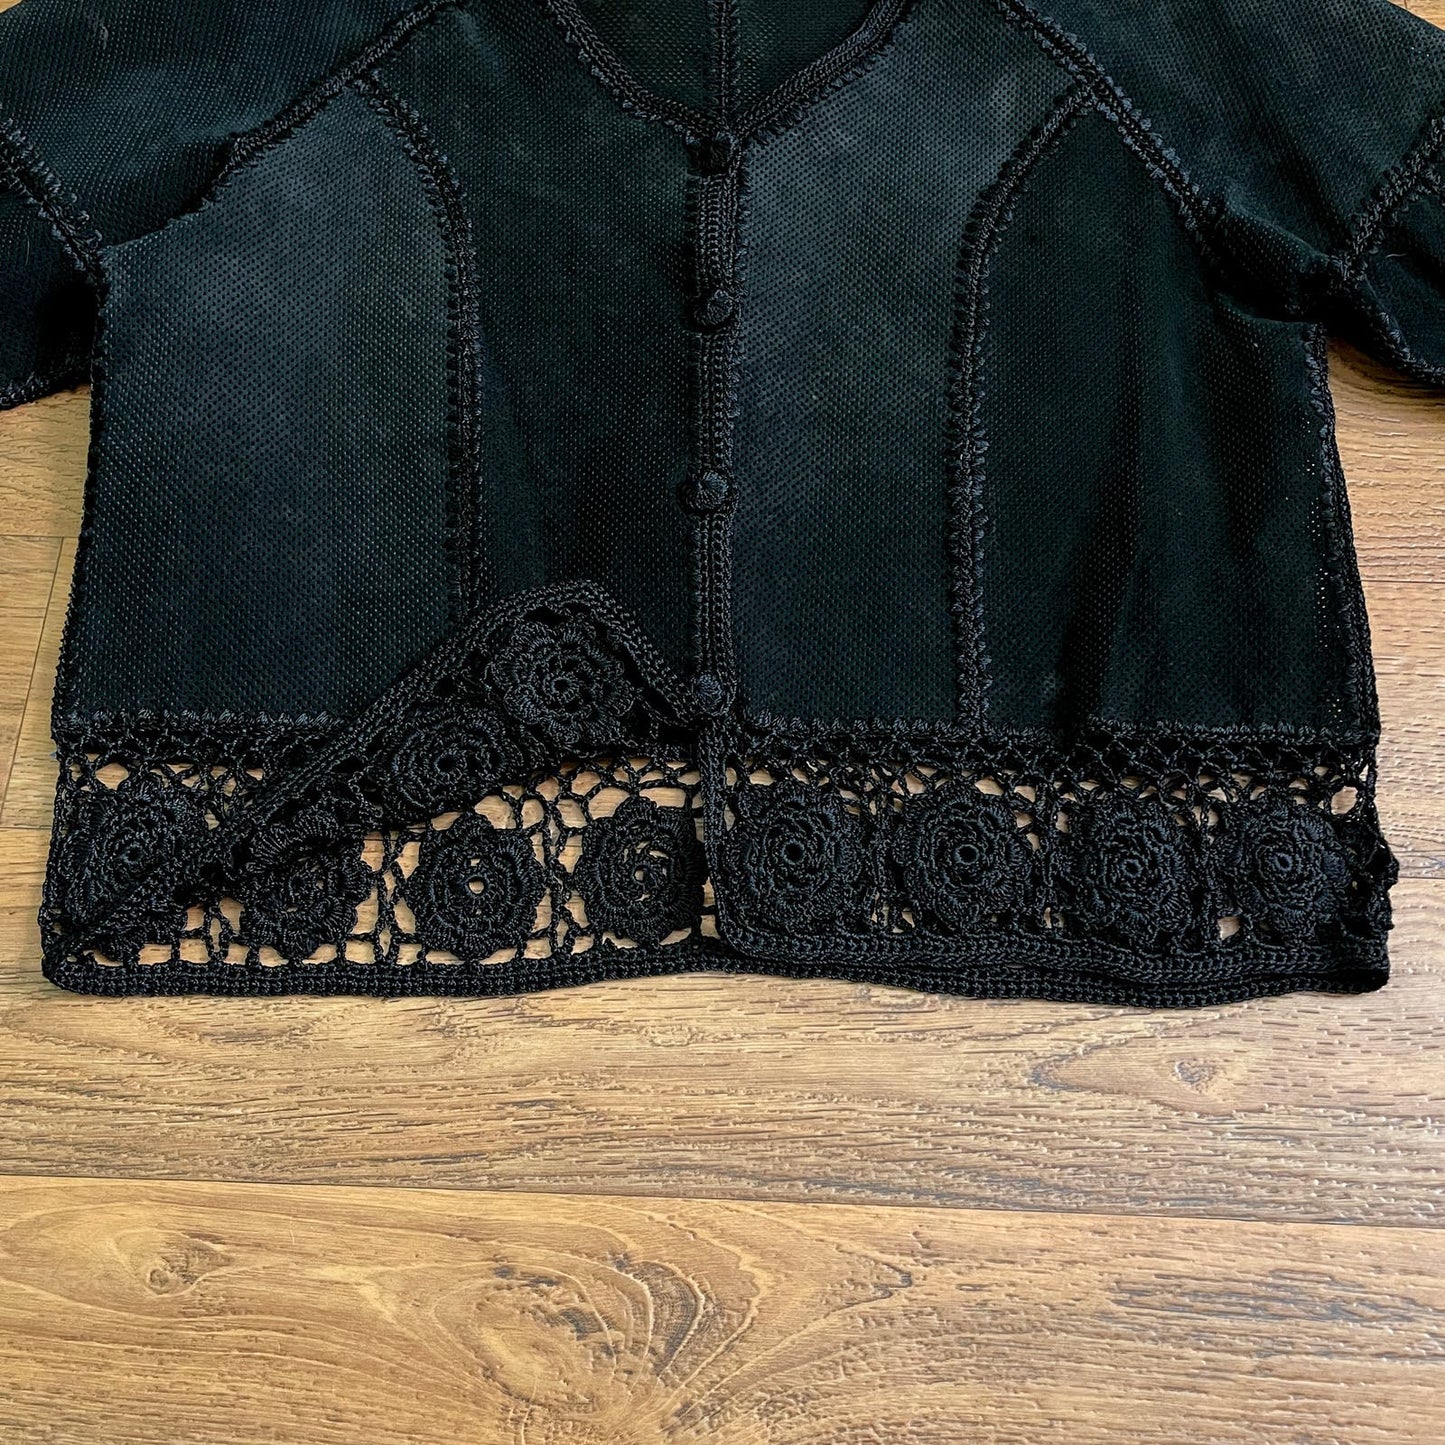 Vintage 90s Black Suede Leather Jacket or Shirt with Floral Crochet Details S